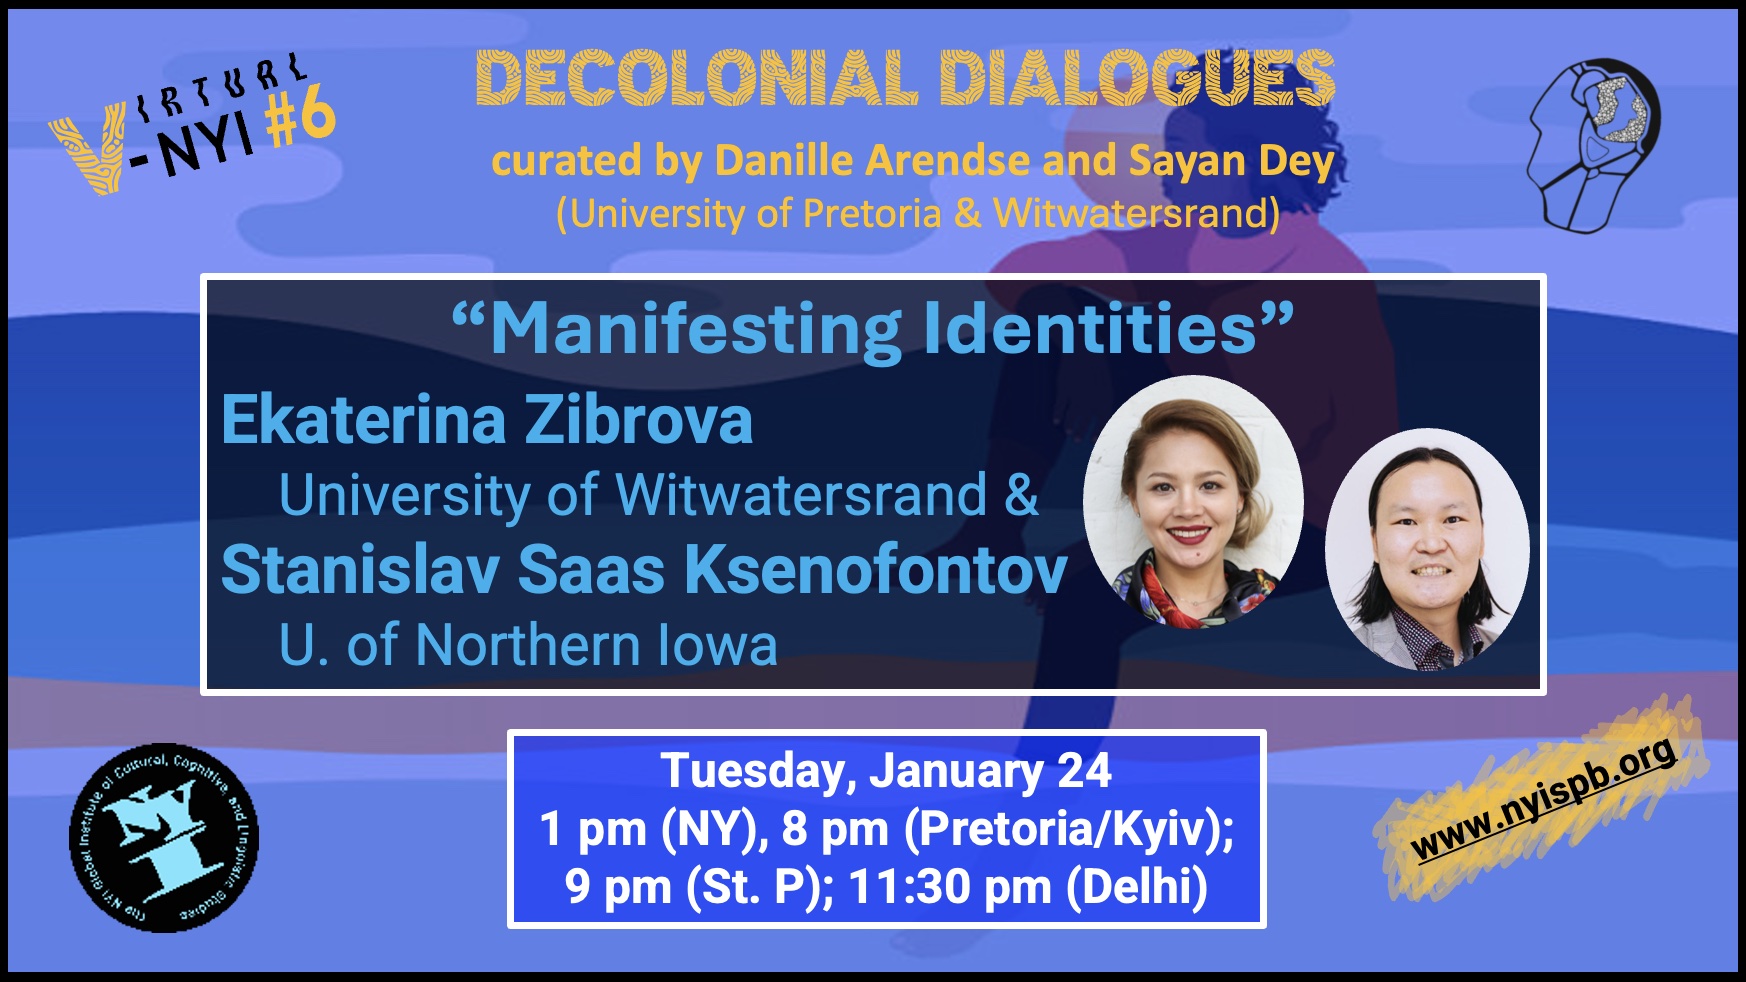 Decolonial Dialogues #4